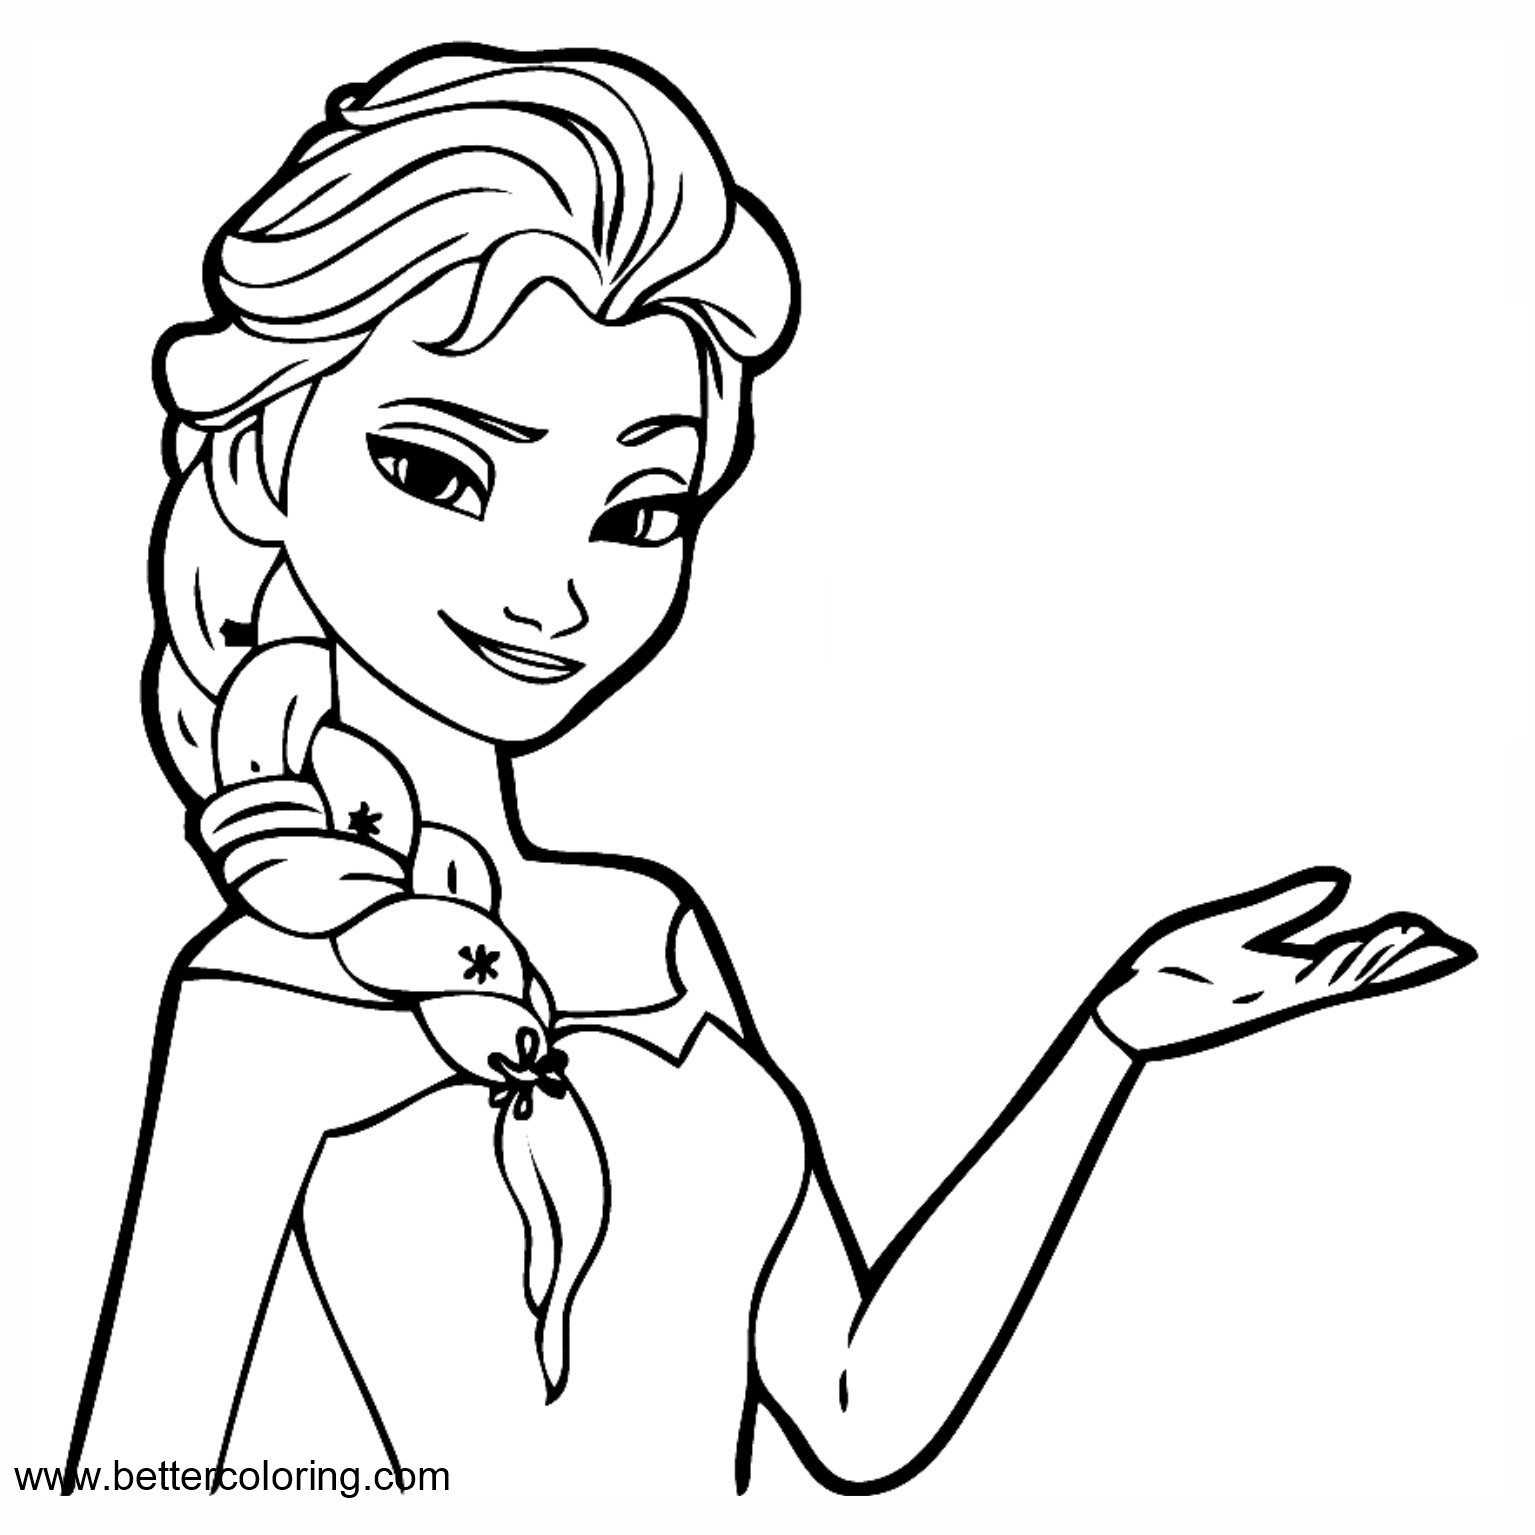 Frozen Princess Coloring Pages Elsa - Free Printable Coloring Pages